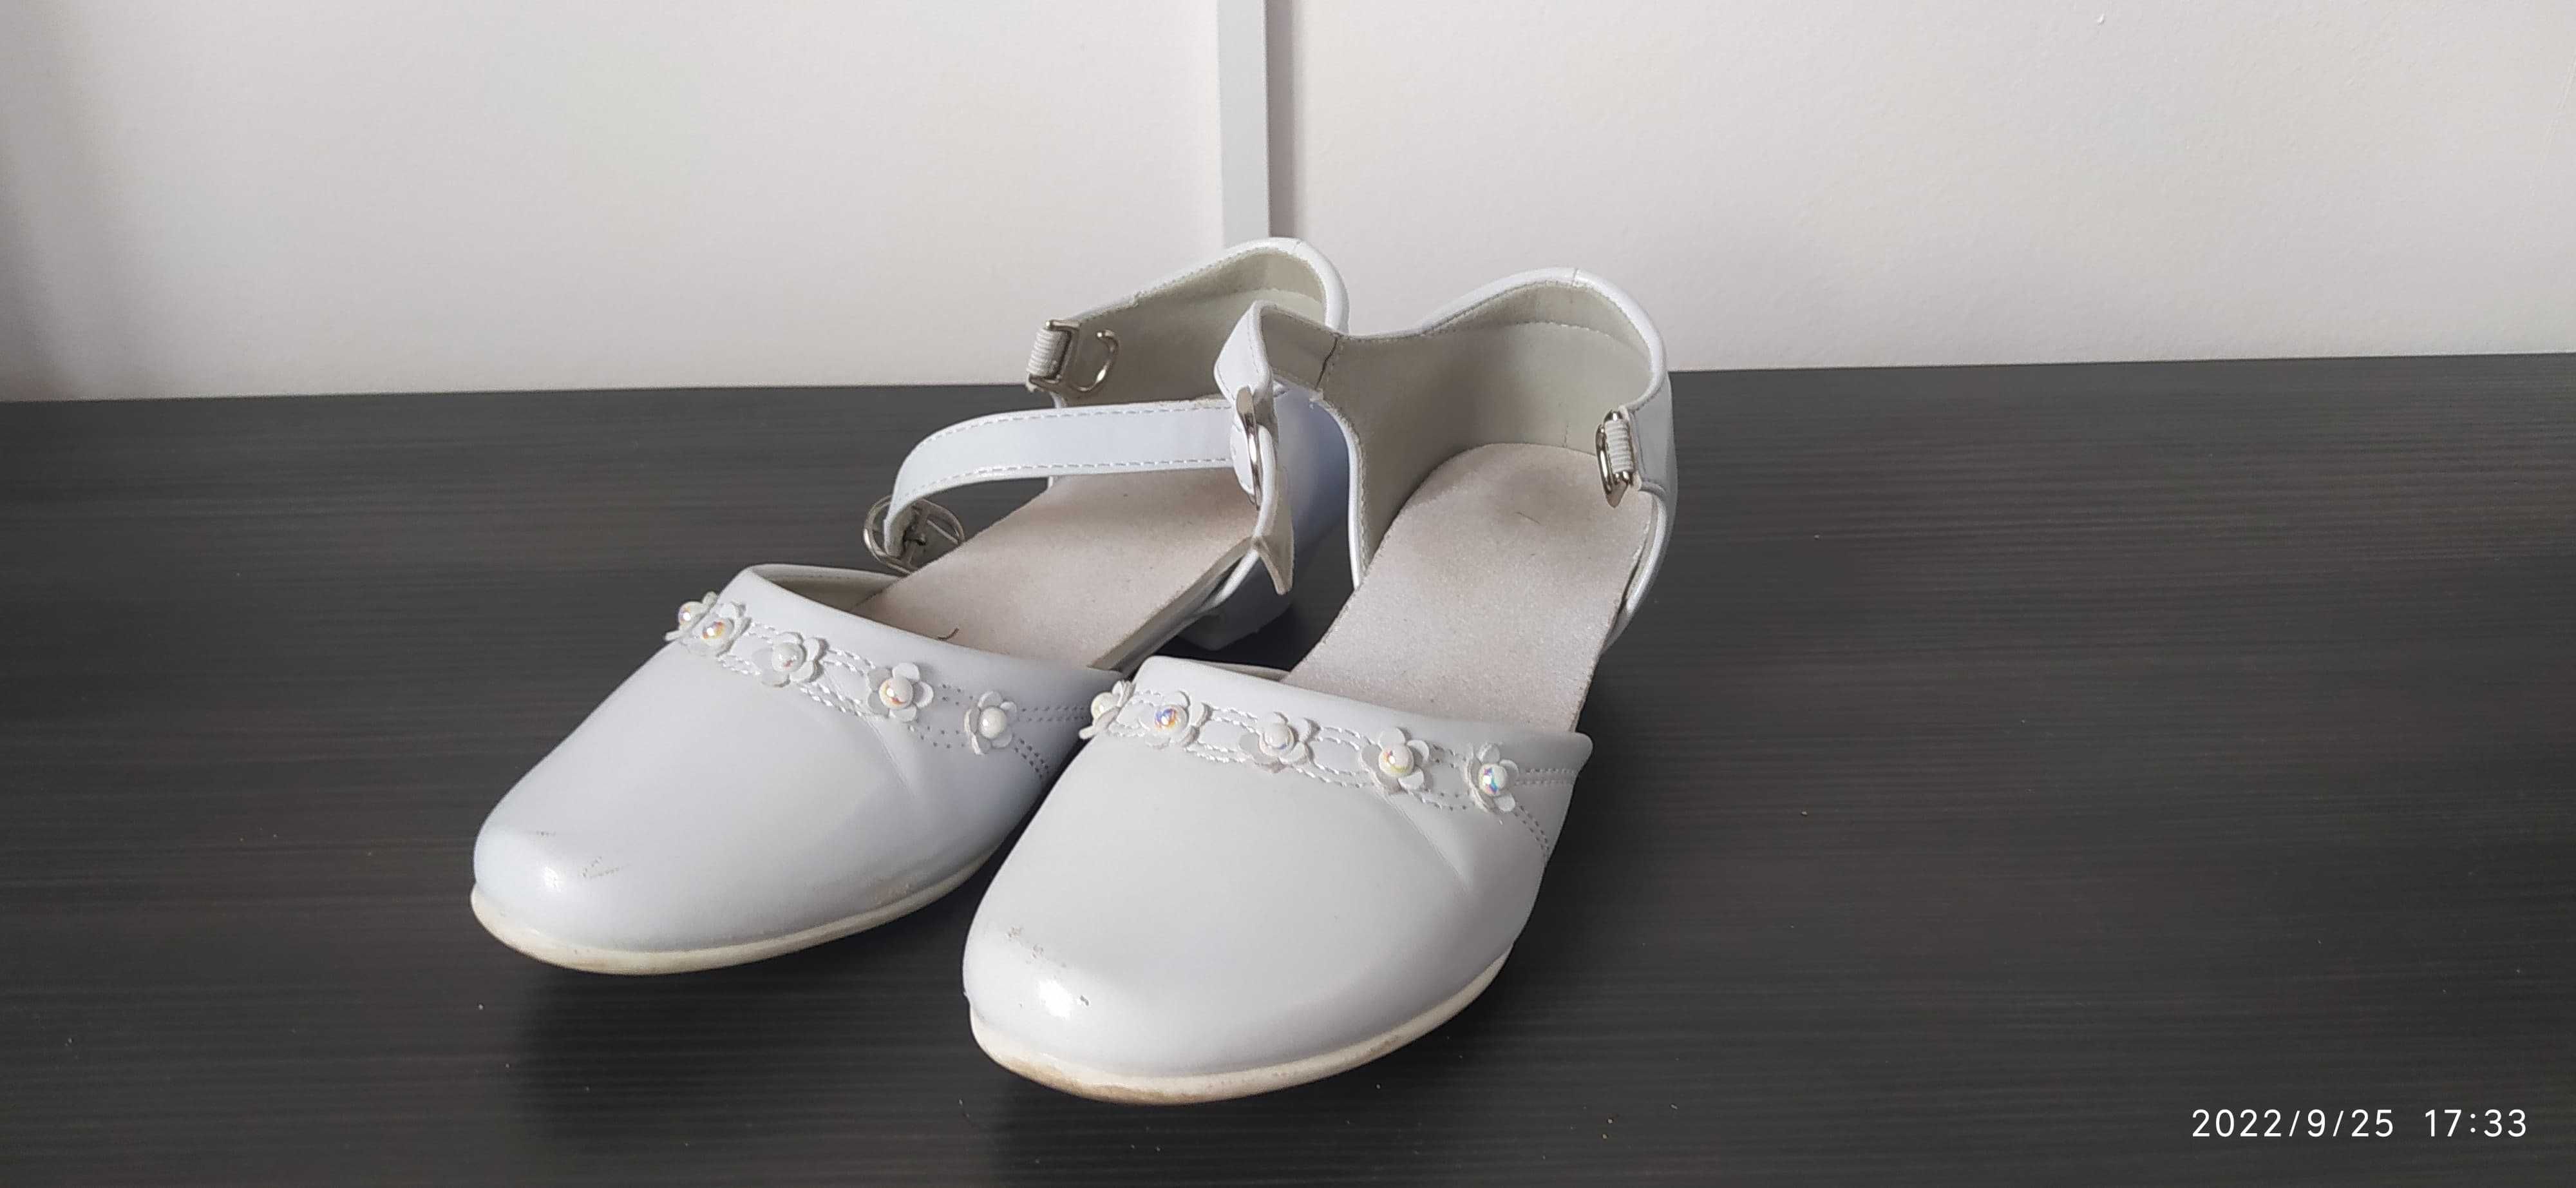 BUTY 32 baleriny pantofle sandały białe wesele